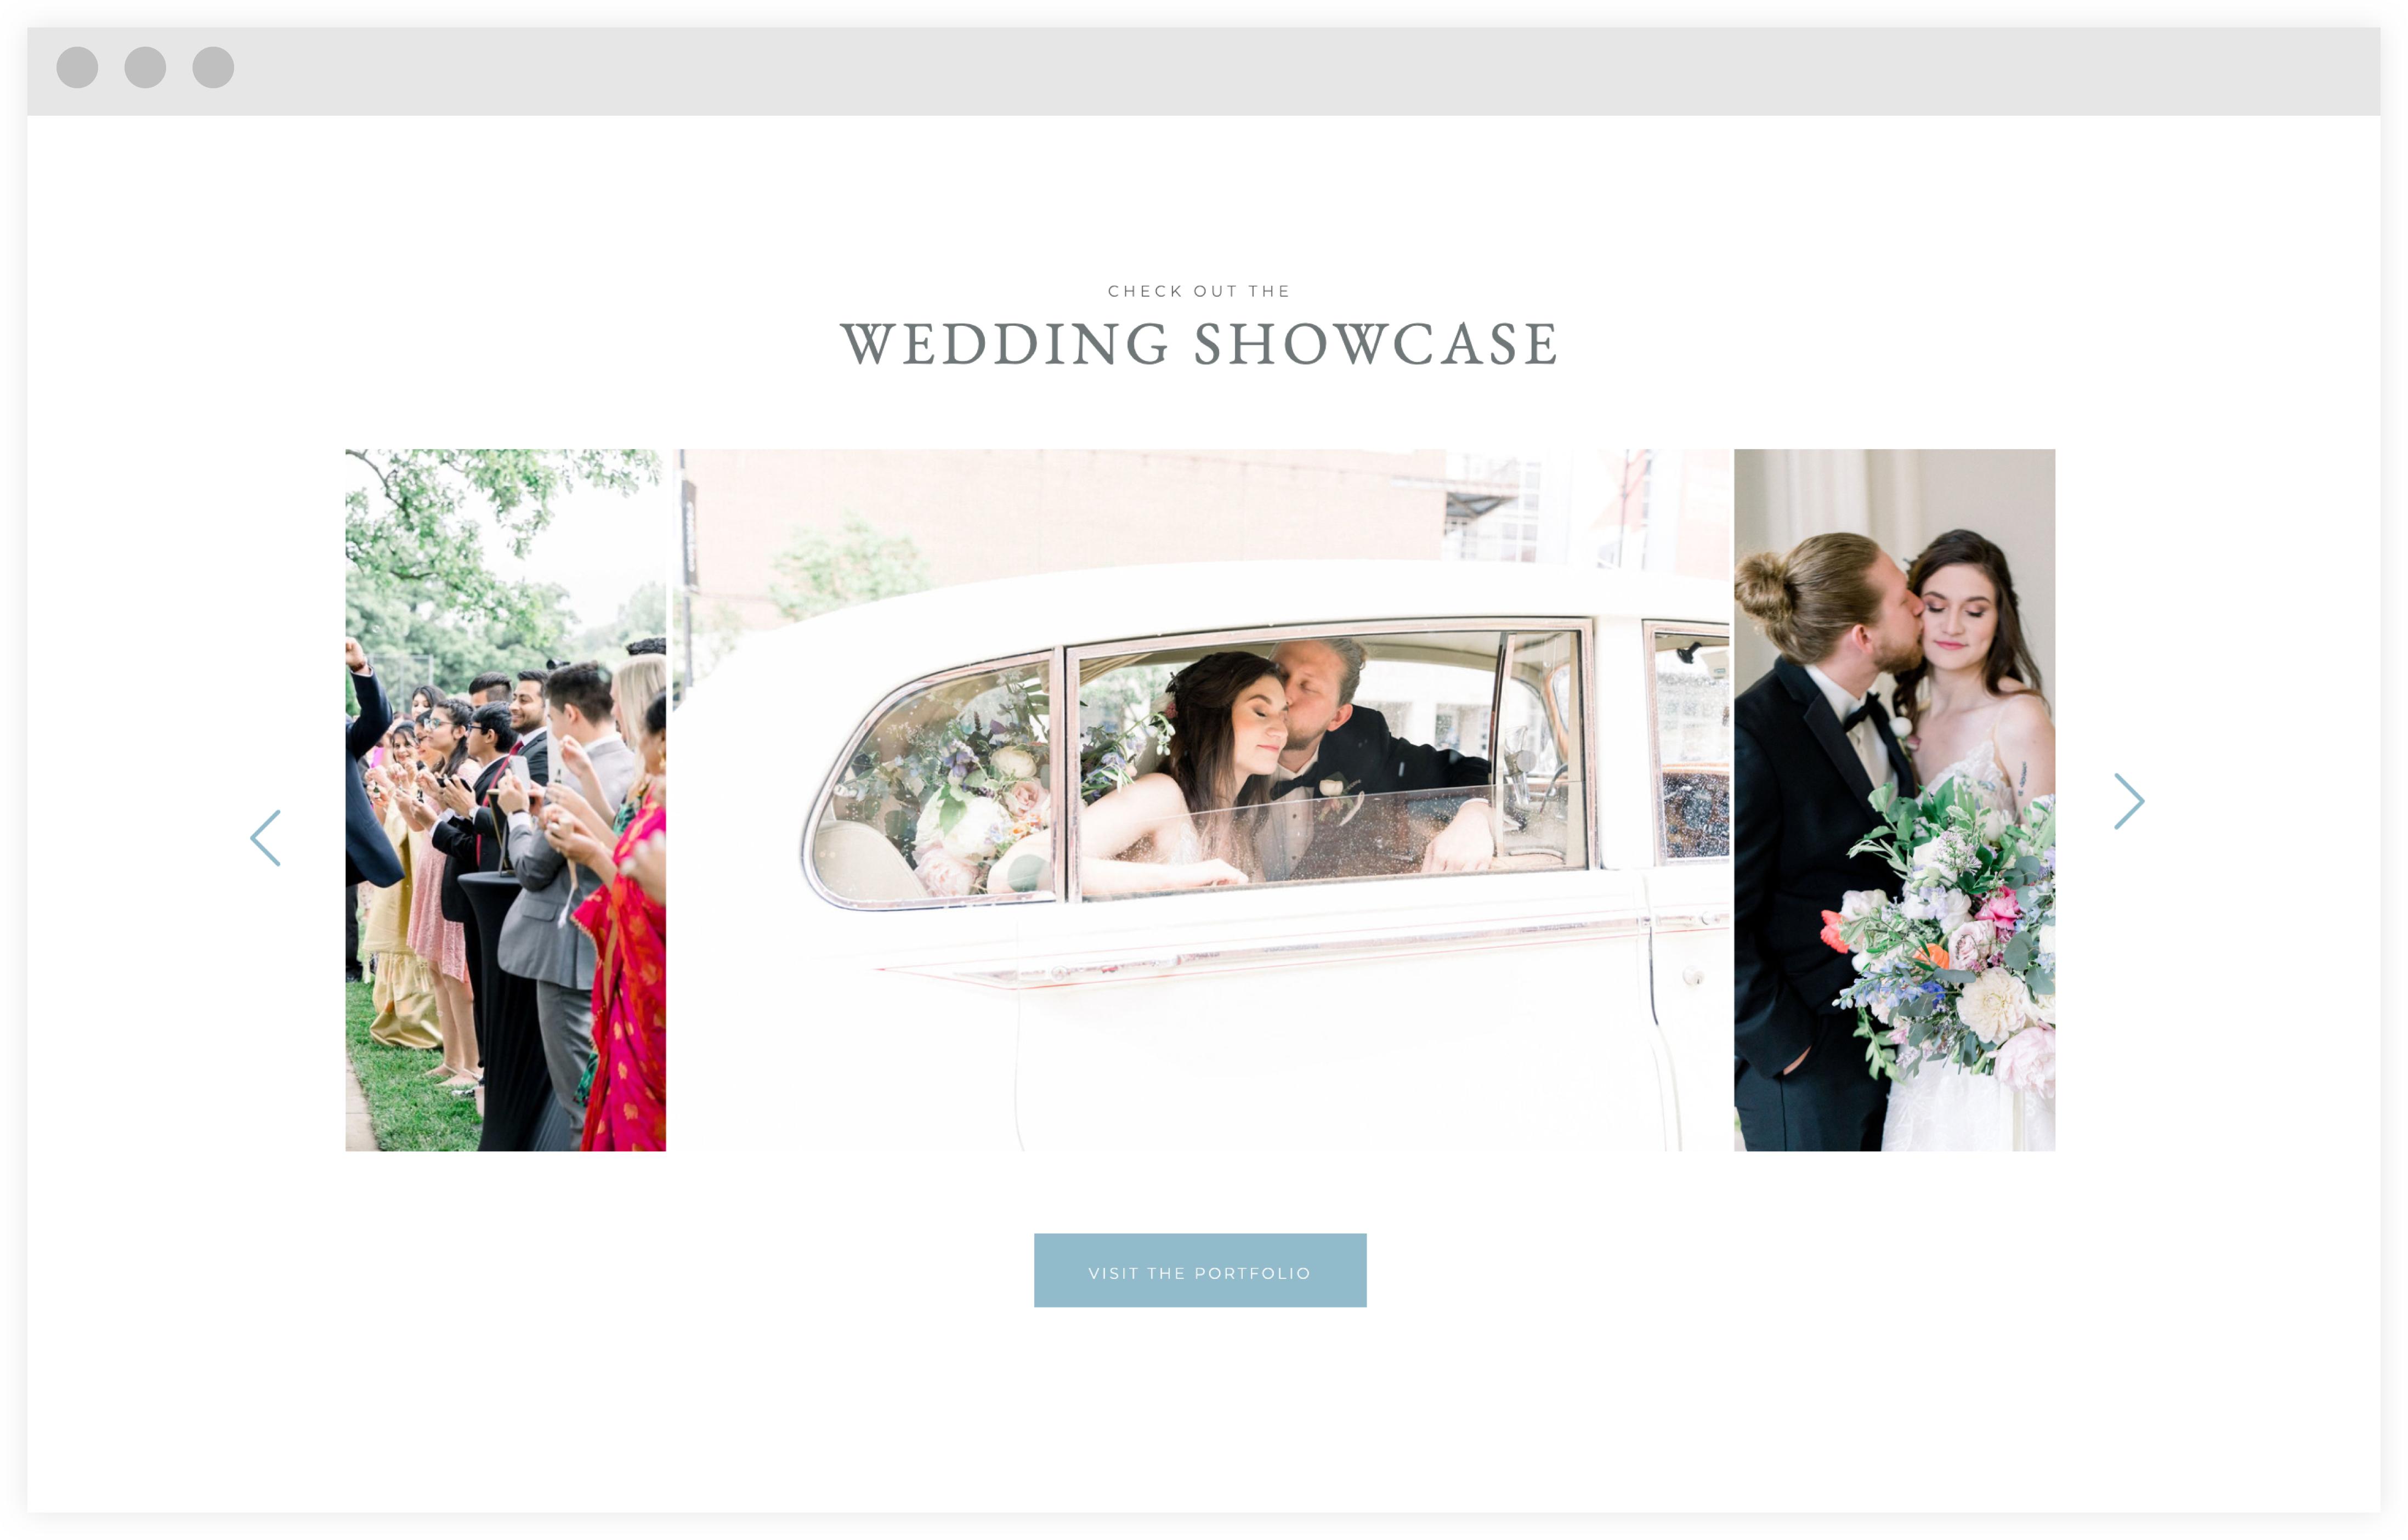 Wedding photographer portfolio page